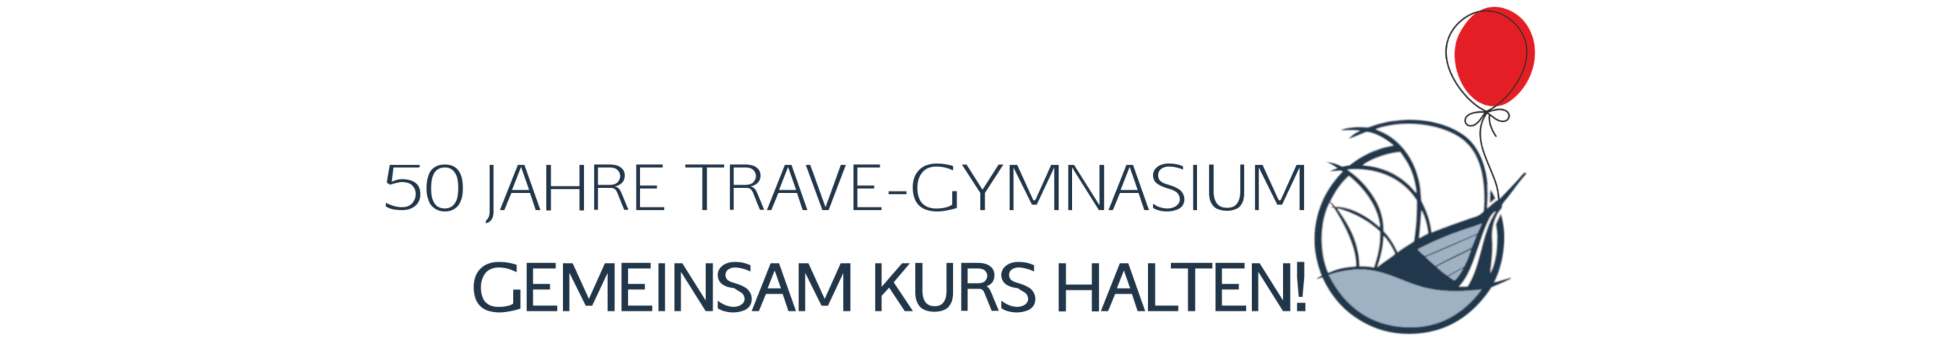 Trave-Gymnasium  Logo